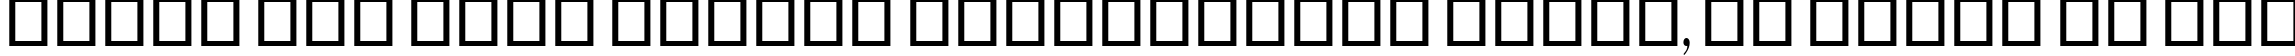 Пример написания шрифтом Onyx текста на русском